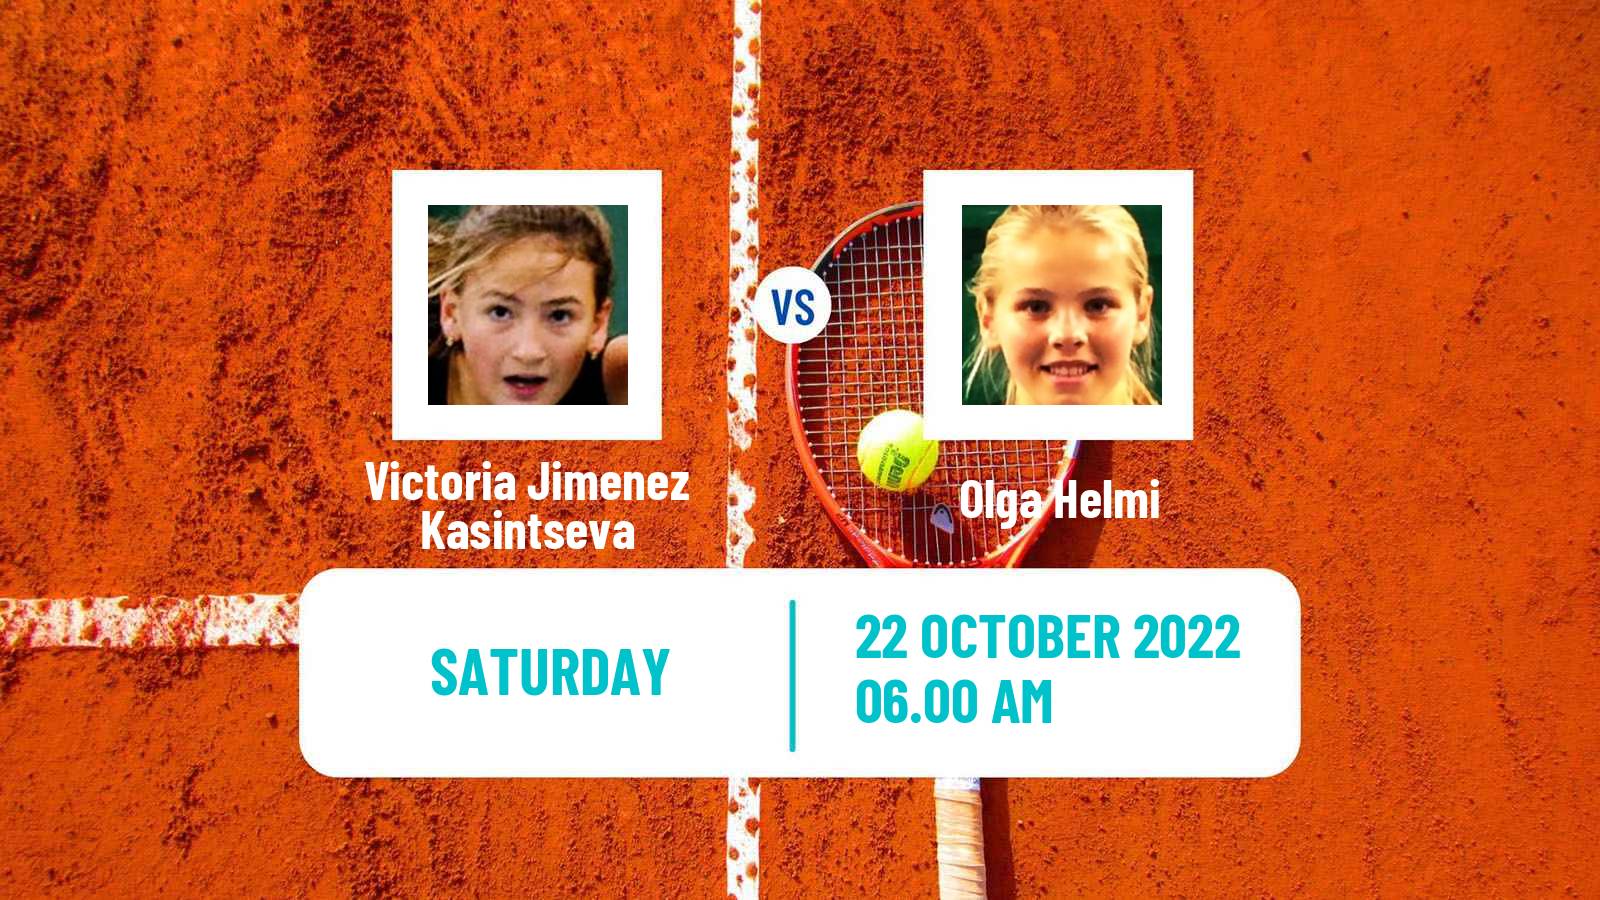 Tennis ITF Tournaments Victoria Jimenez Kasintseva - Olga Helmi